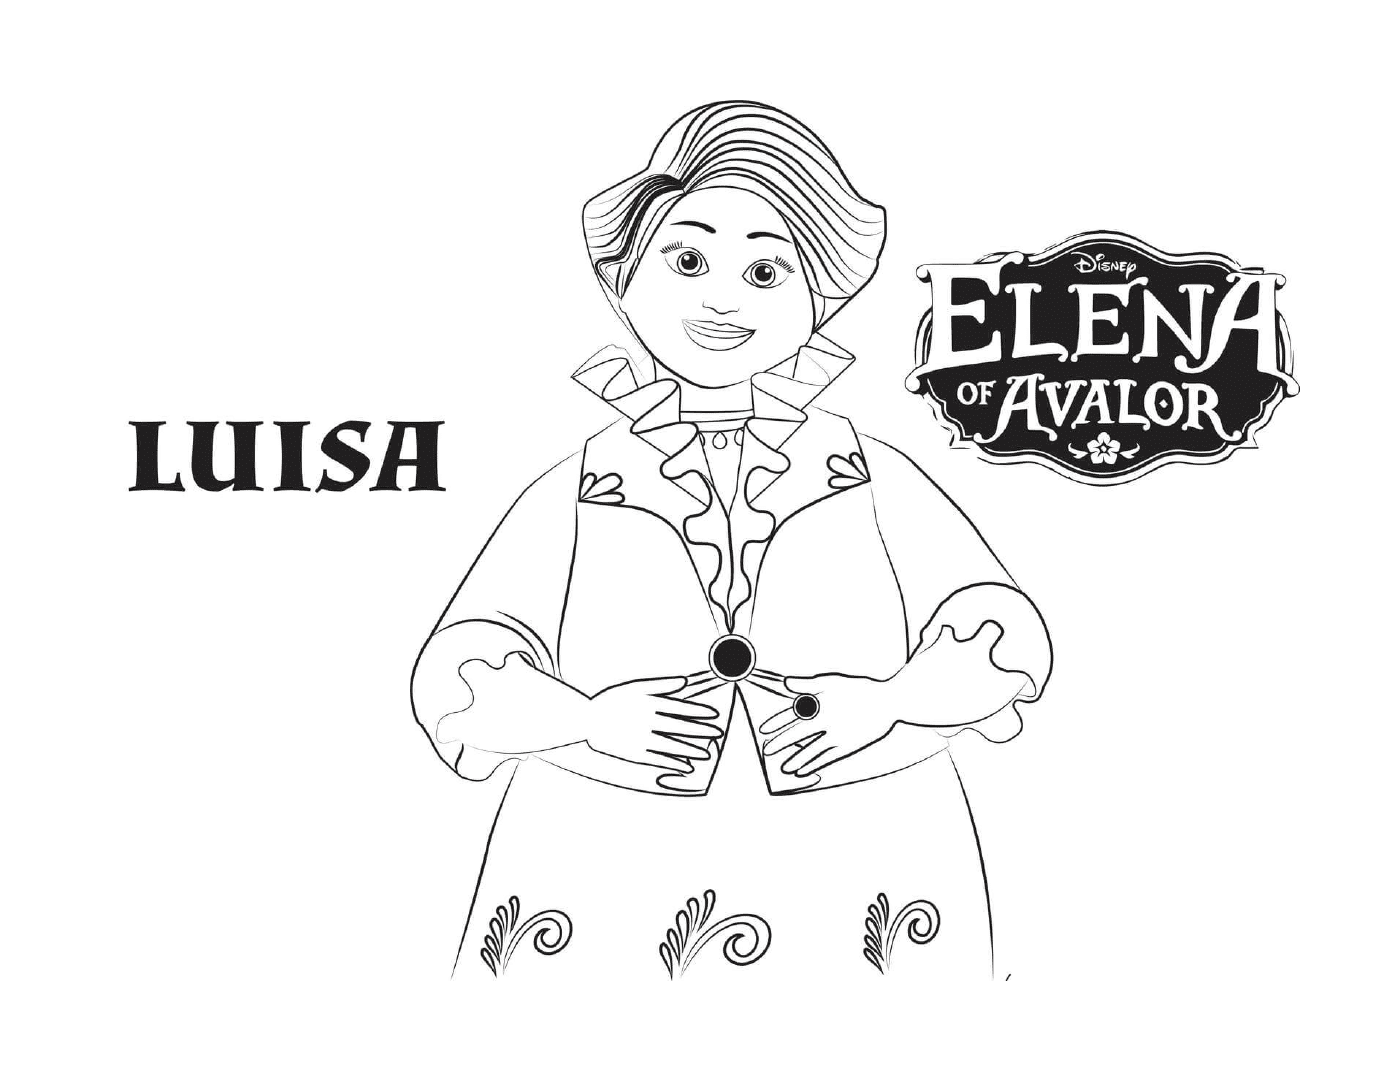   Elena of Avalor, Luisa, Disney 